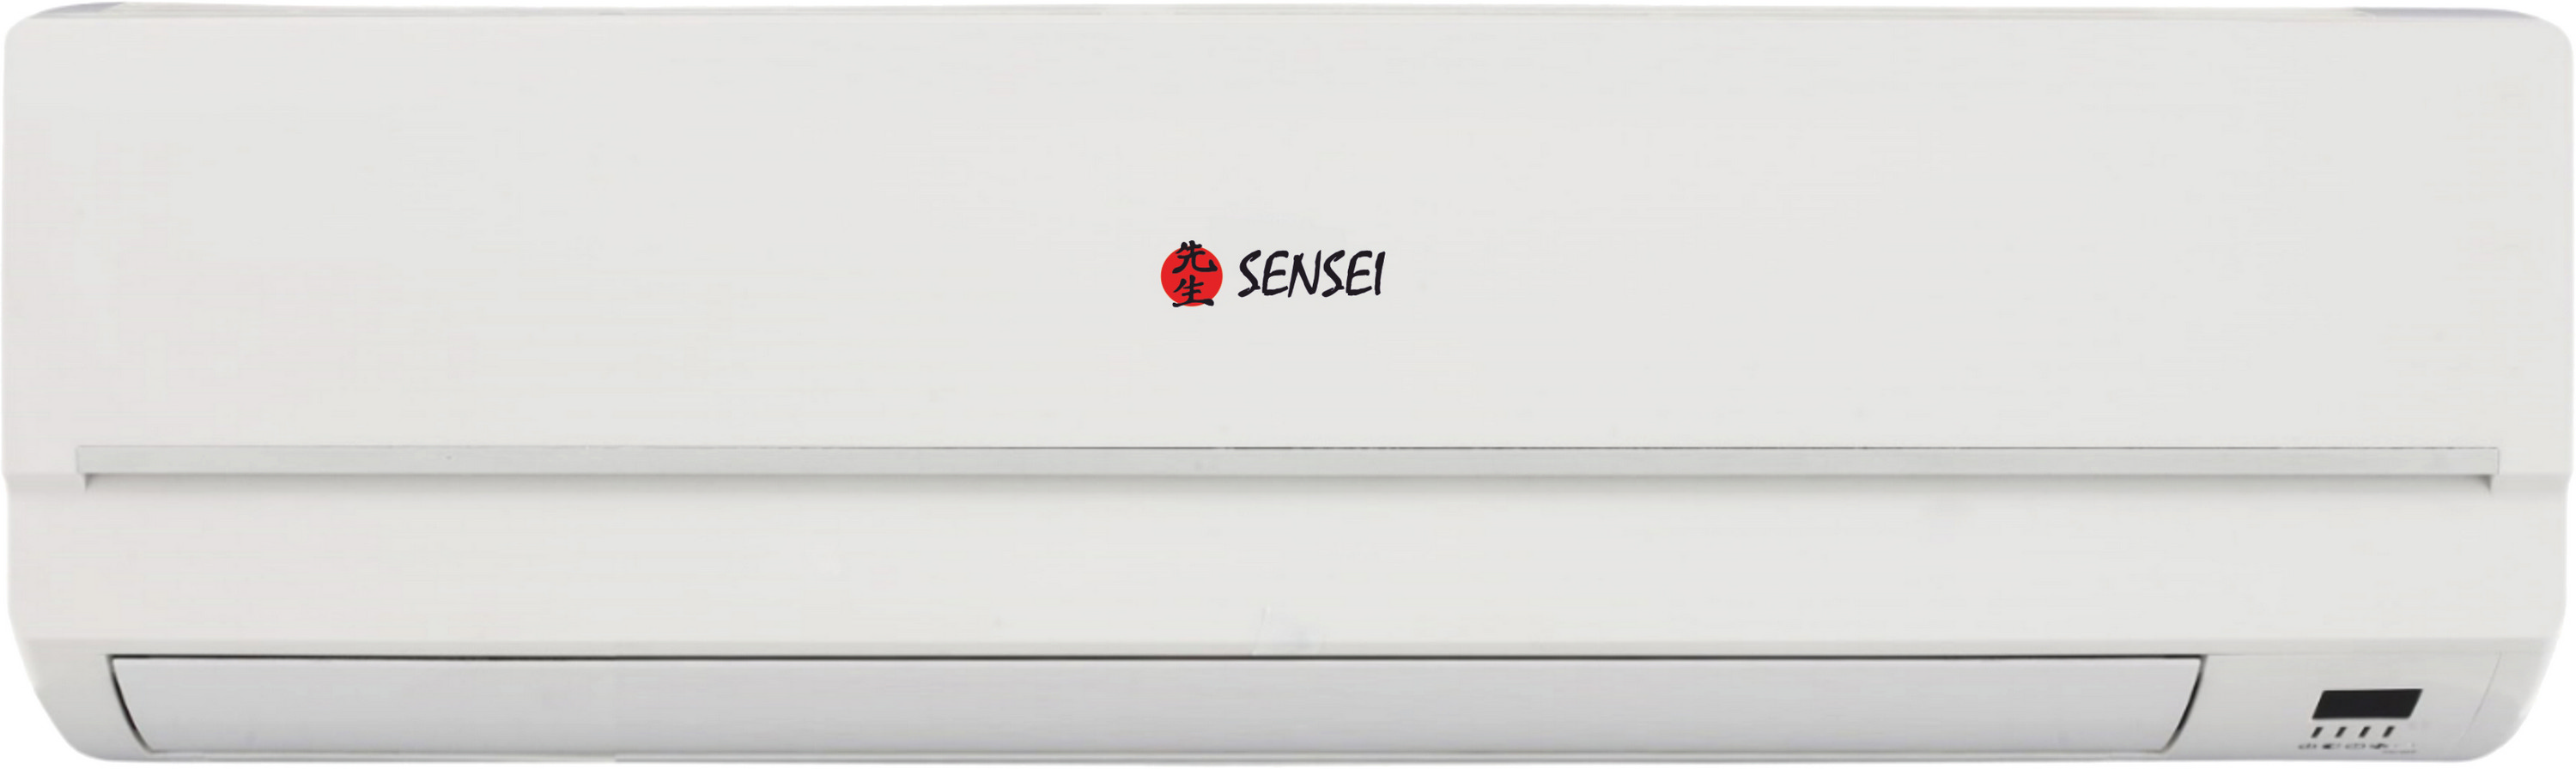 Кондиционер сплит-система Sensei Eco-Standart FTE-23 TWS цена 0.00 грн - фотография 2